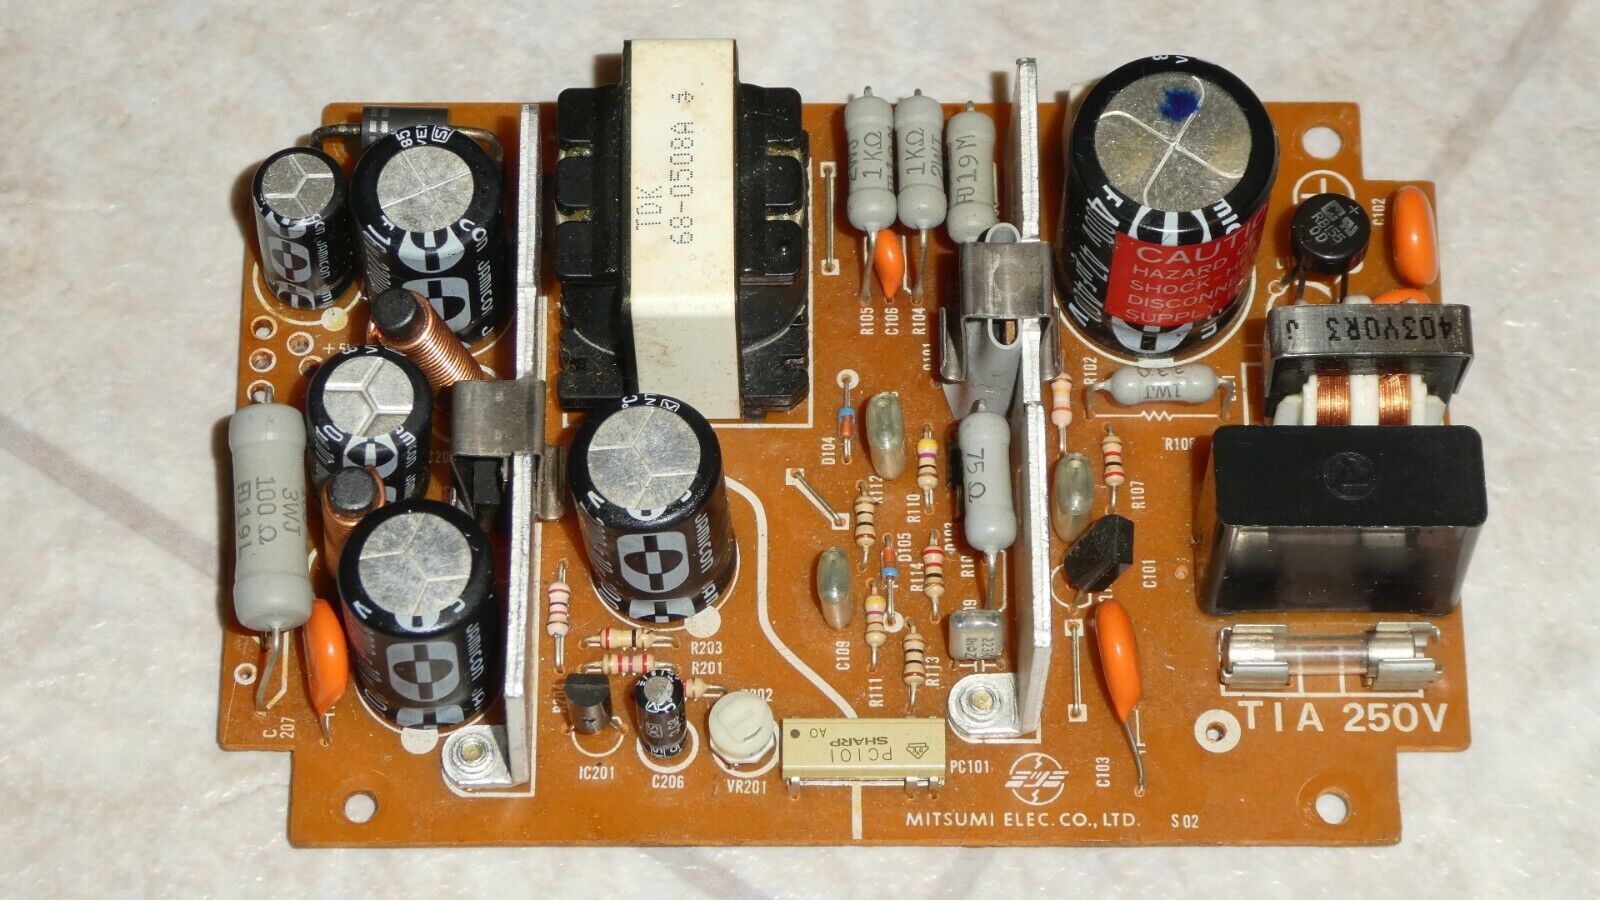 Atari 520 1040 ST STF STFM STE internal power supply PSU 220/240V UK Europe 